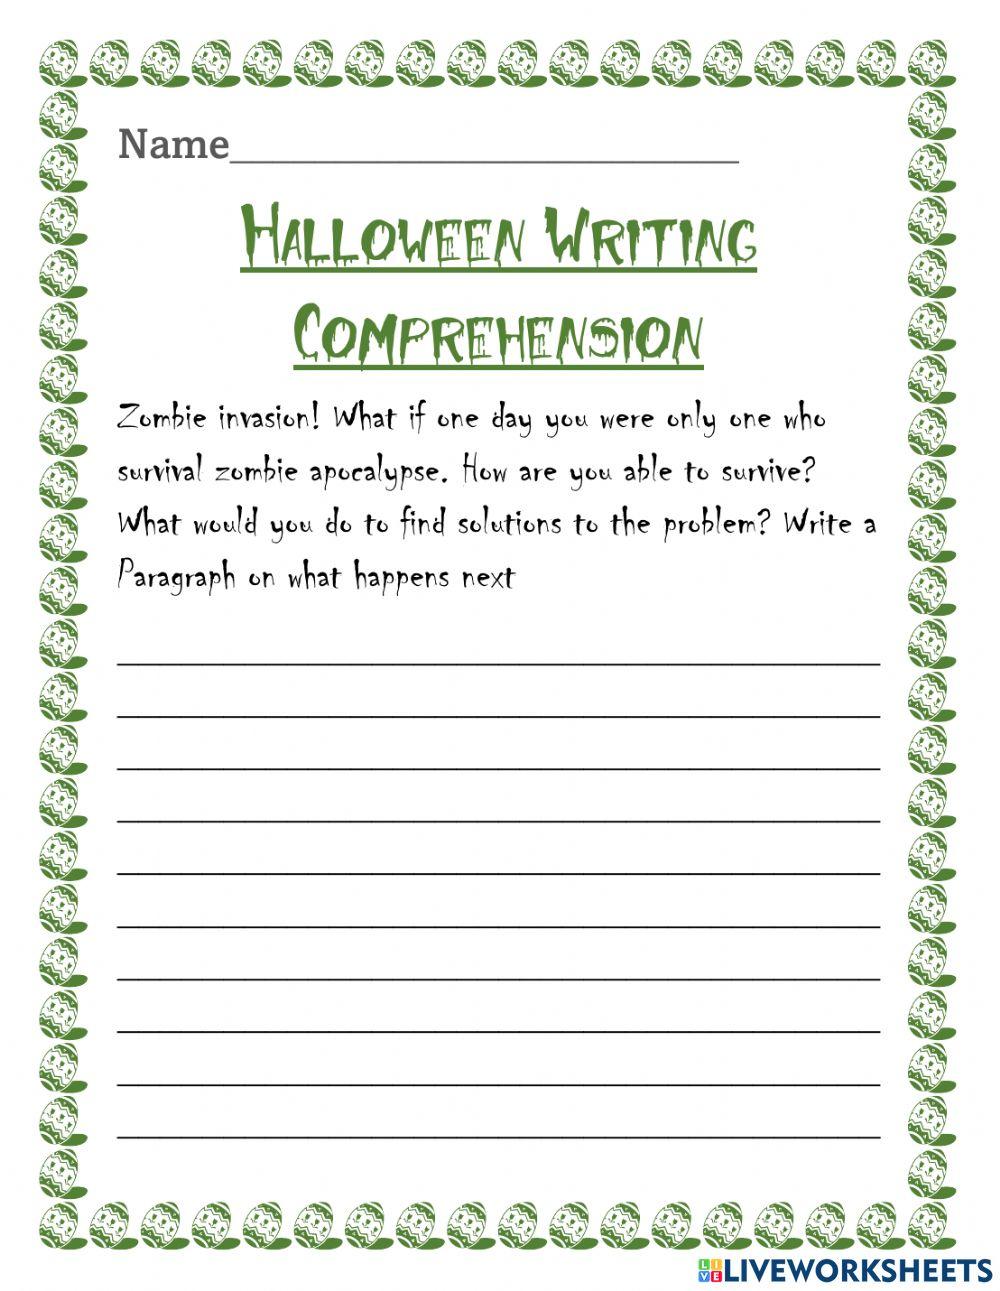 Halloween Writing Assignment